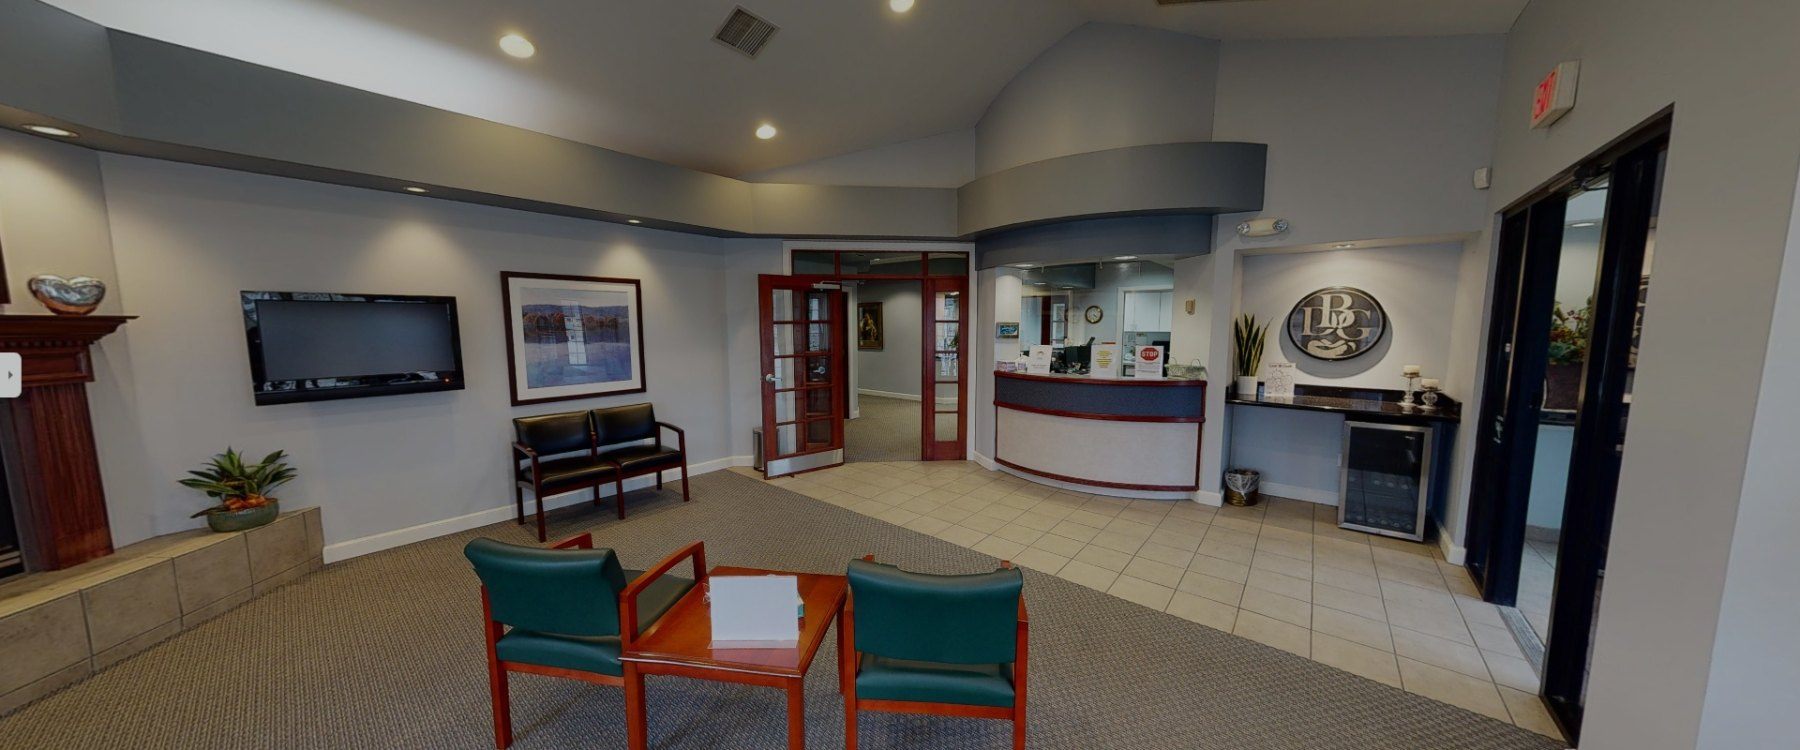 Broken Arrow Oklahoma dental office reception area